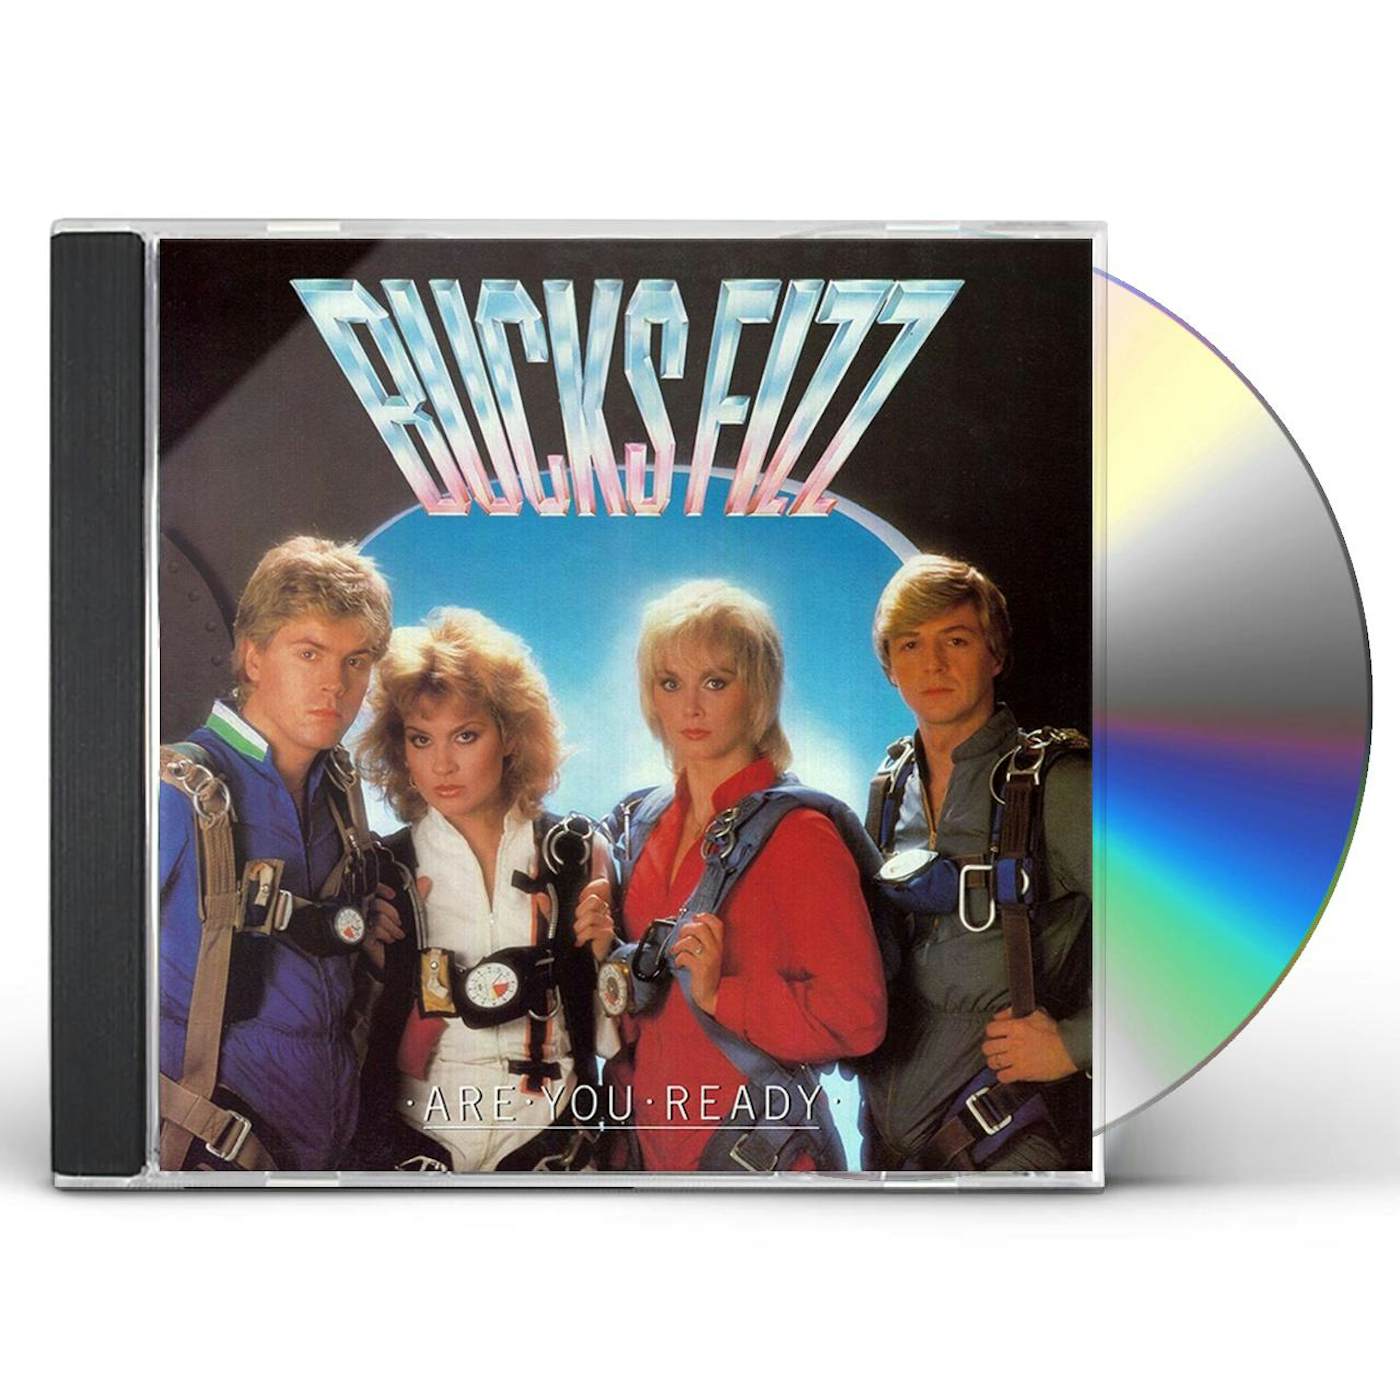 Bucks Fizz ARE YOU READY: DEFINITIVE EDITION CD